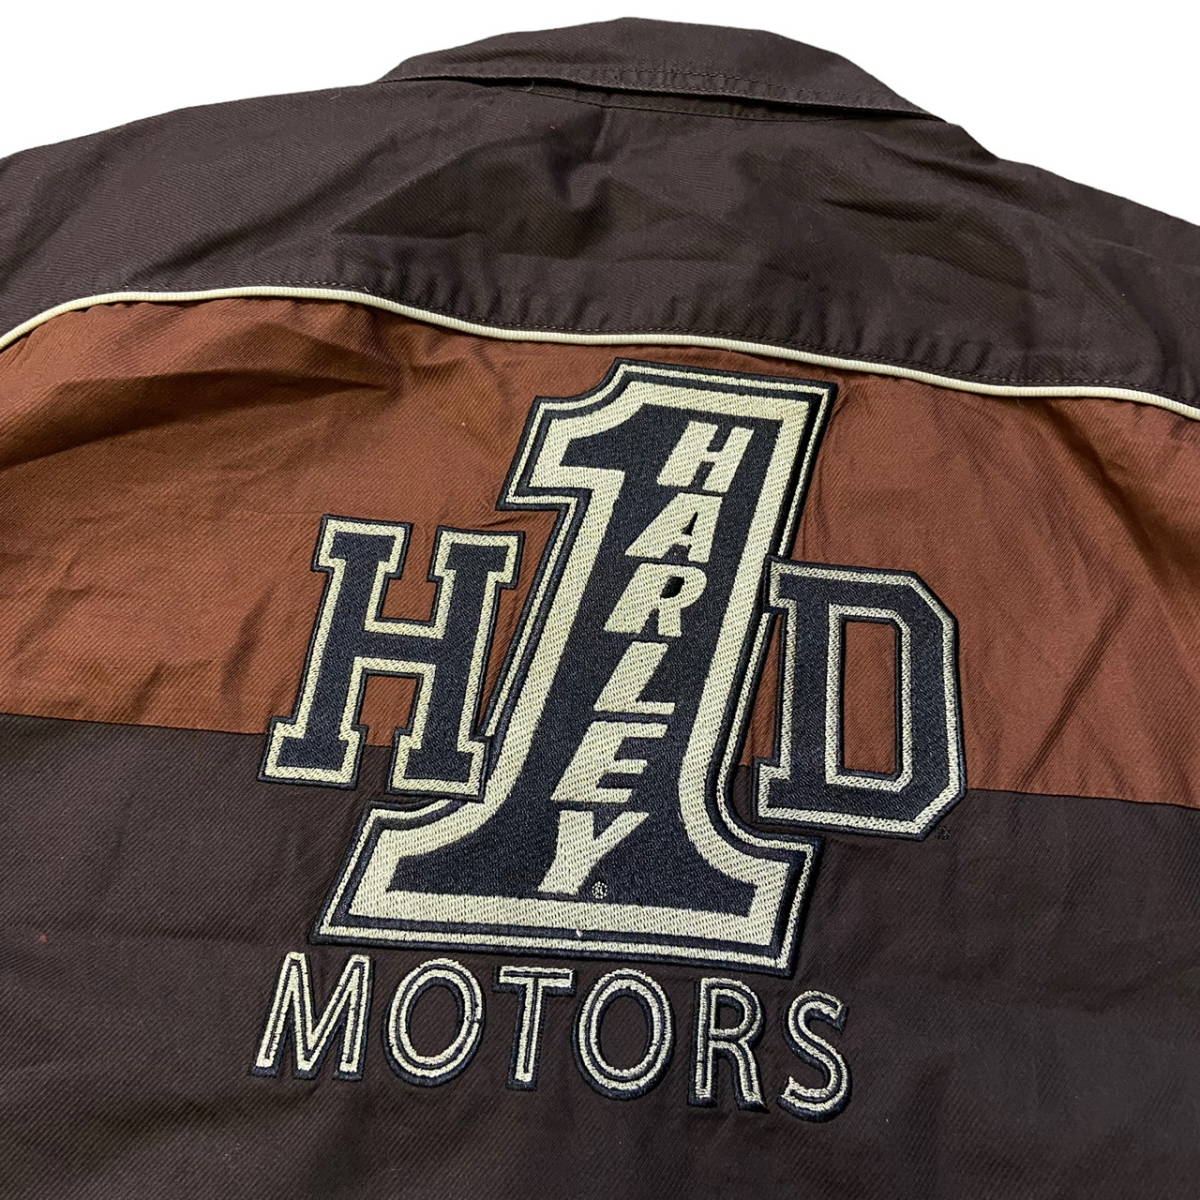 Harley Davidson ハーレーダビッドソン オープンカラーシャツ M ブラウン 半袖 開襟 ロゴ 刺繍 ボタンシャツ MOTORS モーターサイクル_画像6